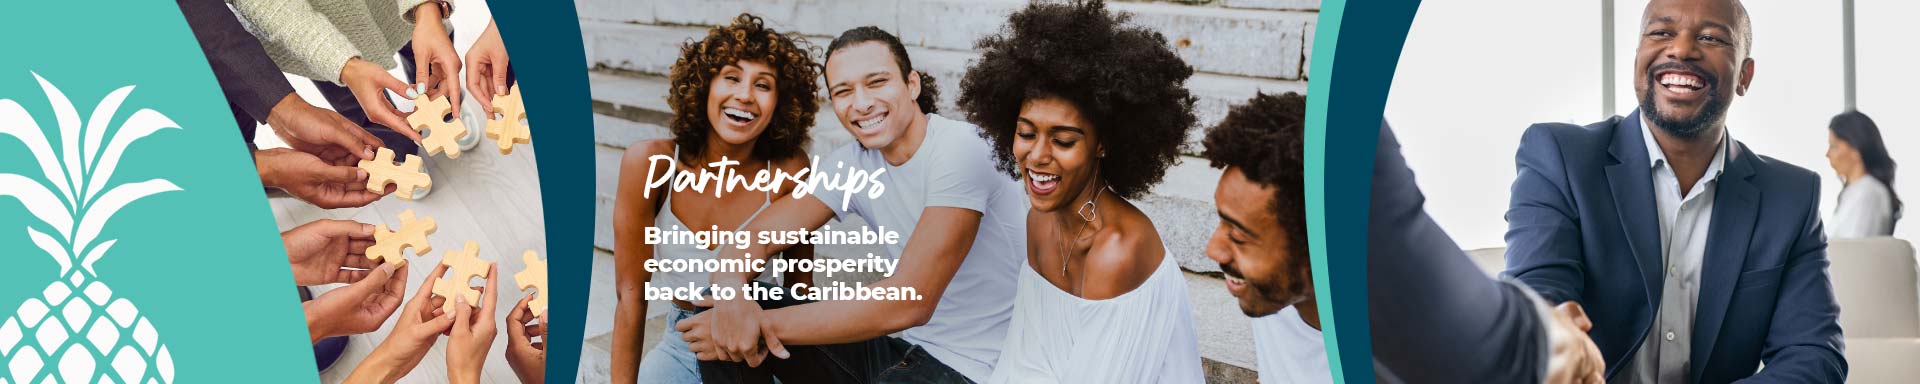 Caribbean Partnerships